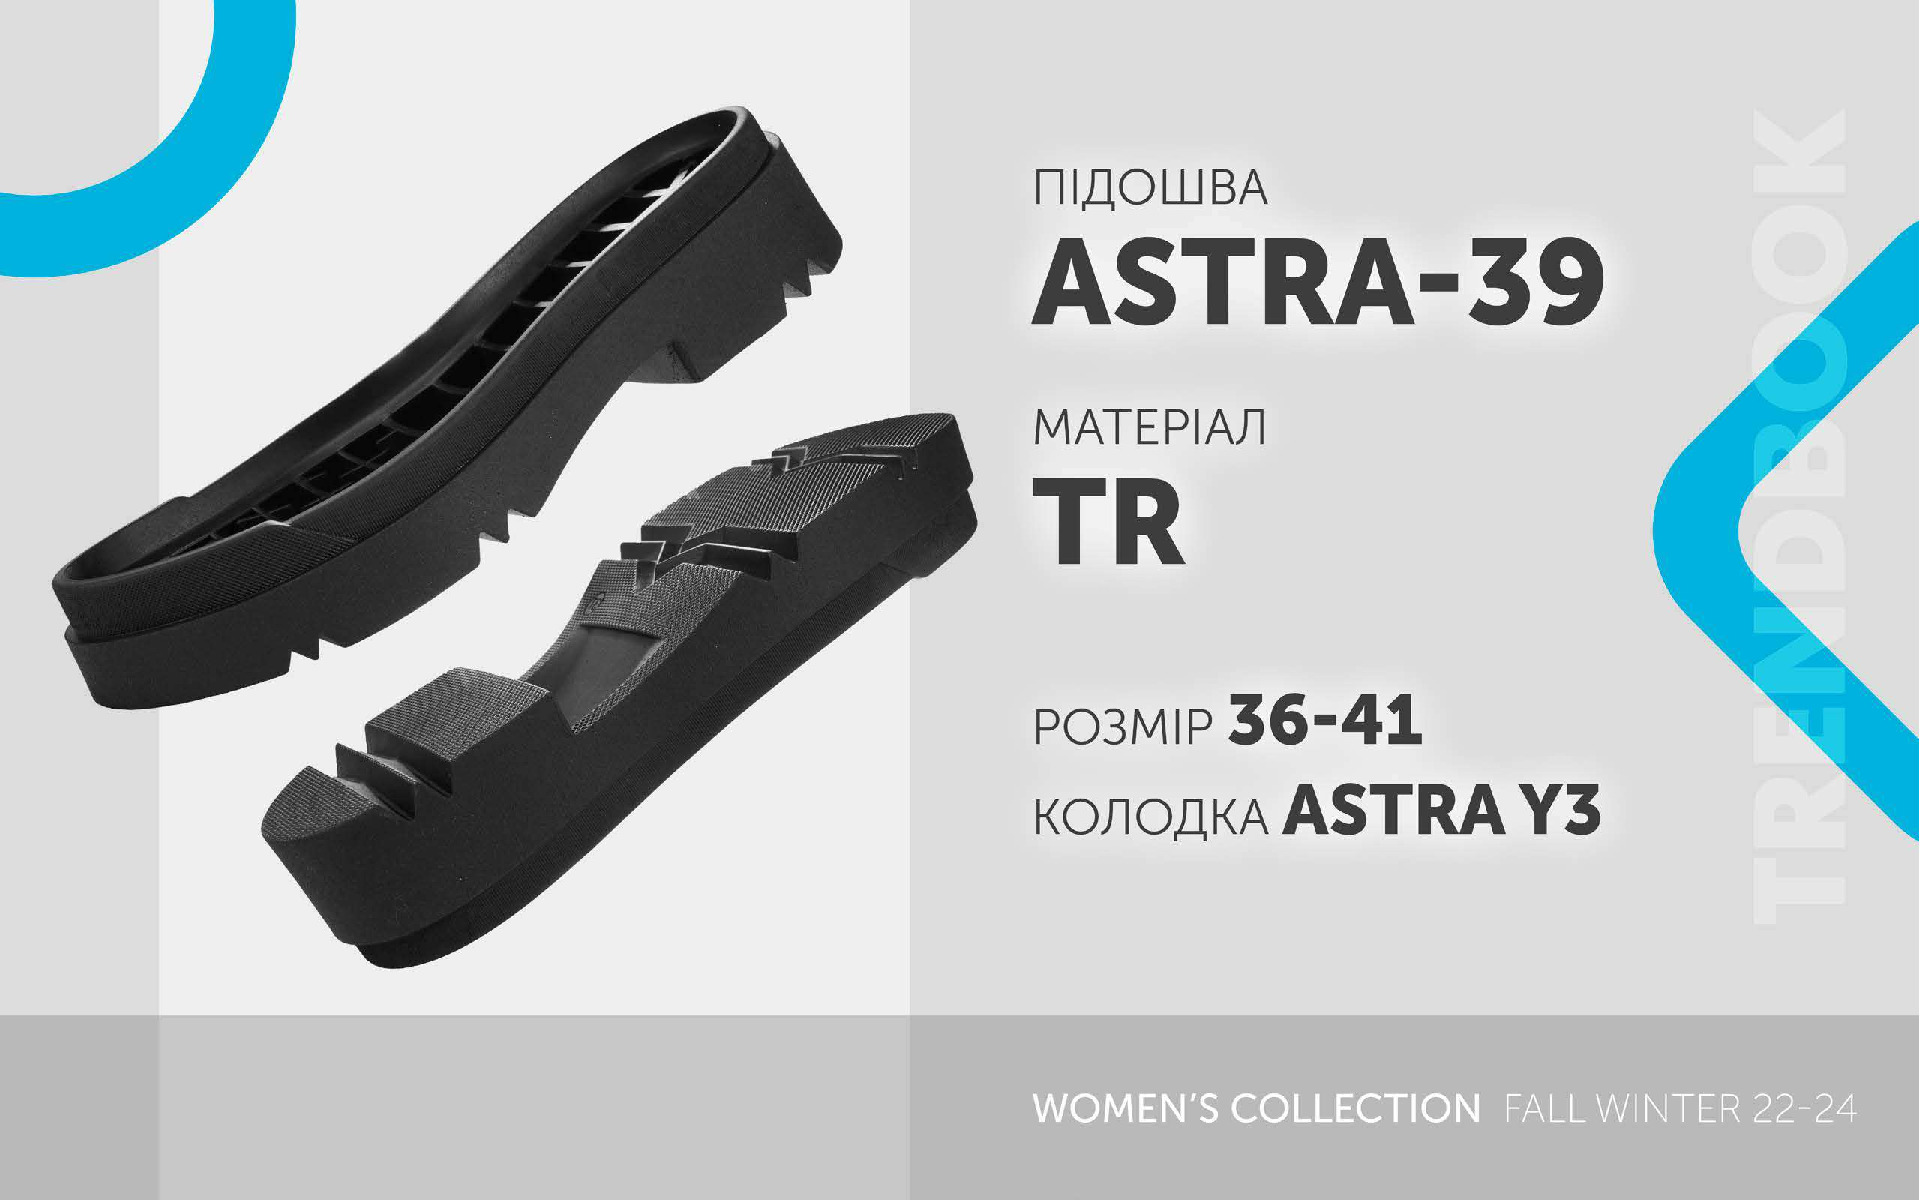 Astra-39